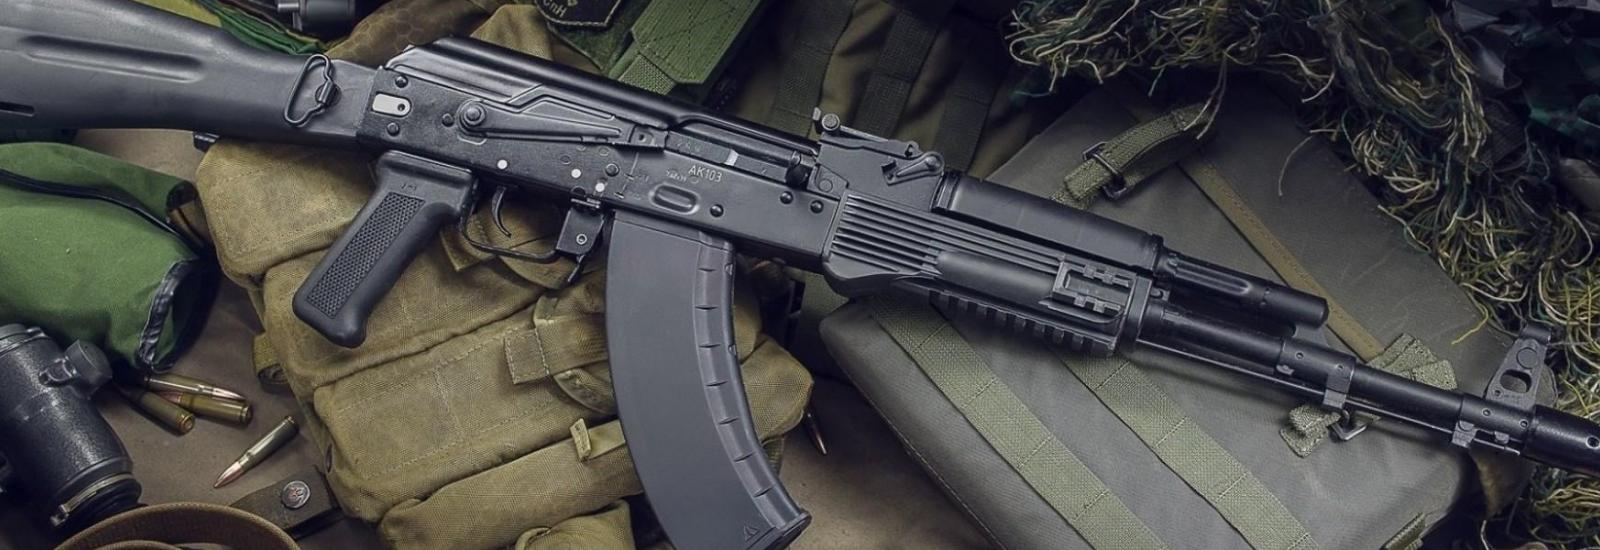 AK47 Kalashnikov Assaul Rifle